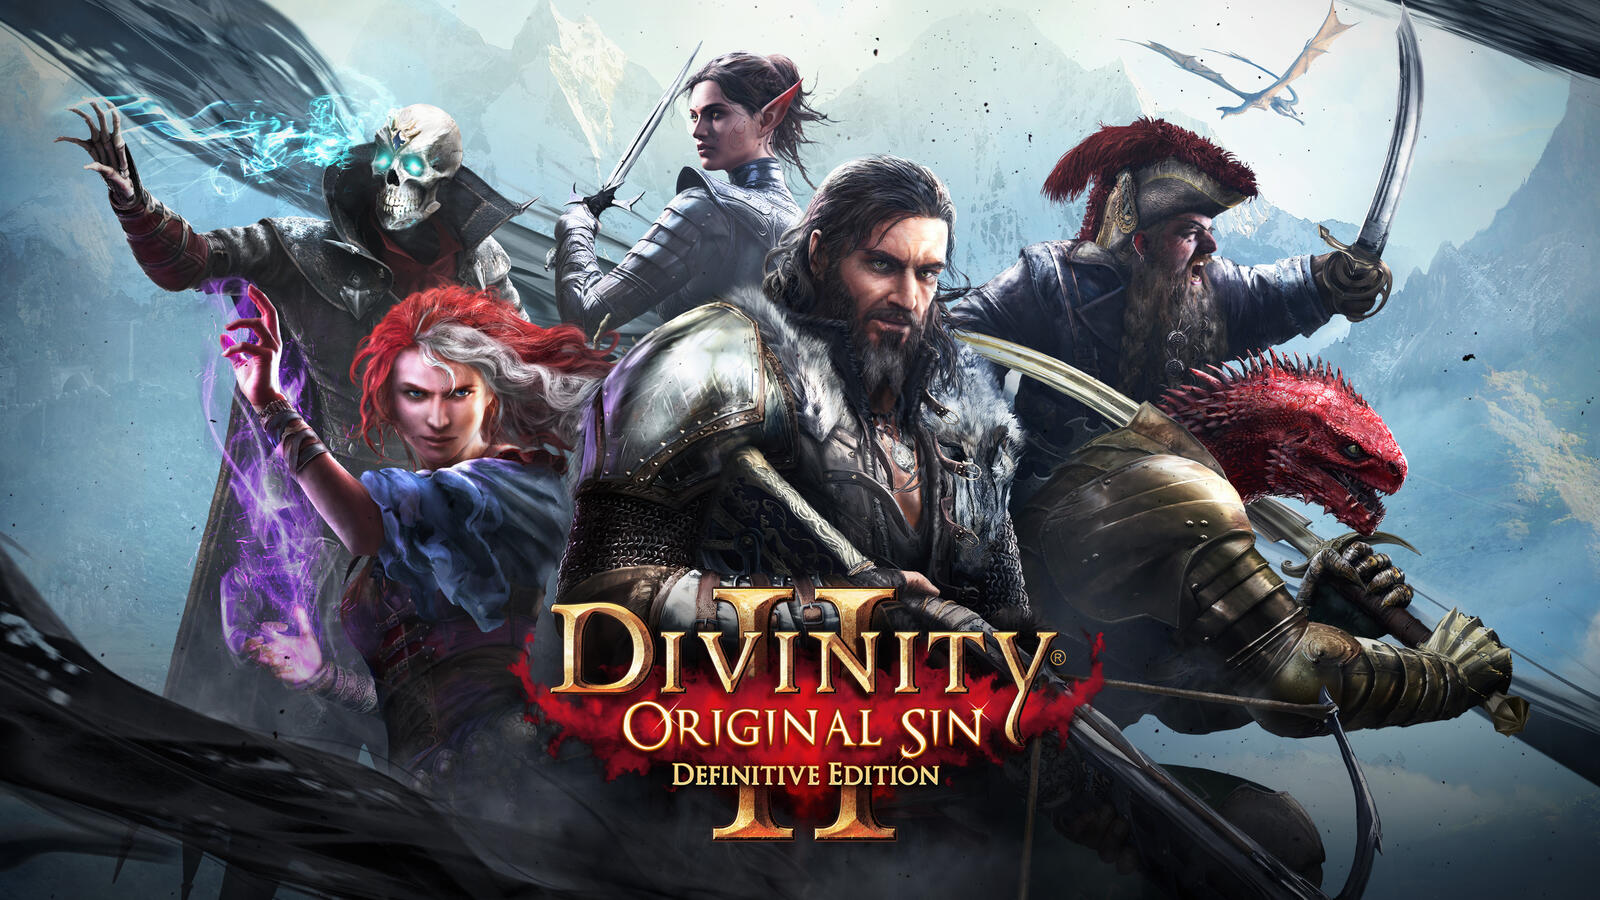 Wallpapers divinity original sin 2 games 2017 games on the desktop